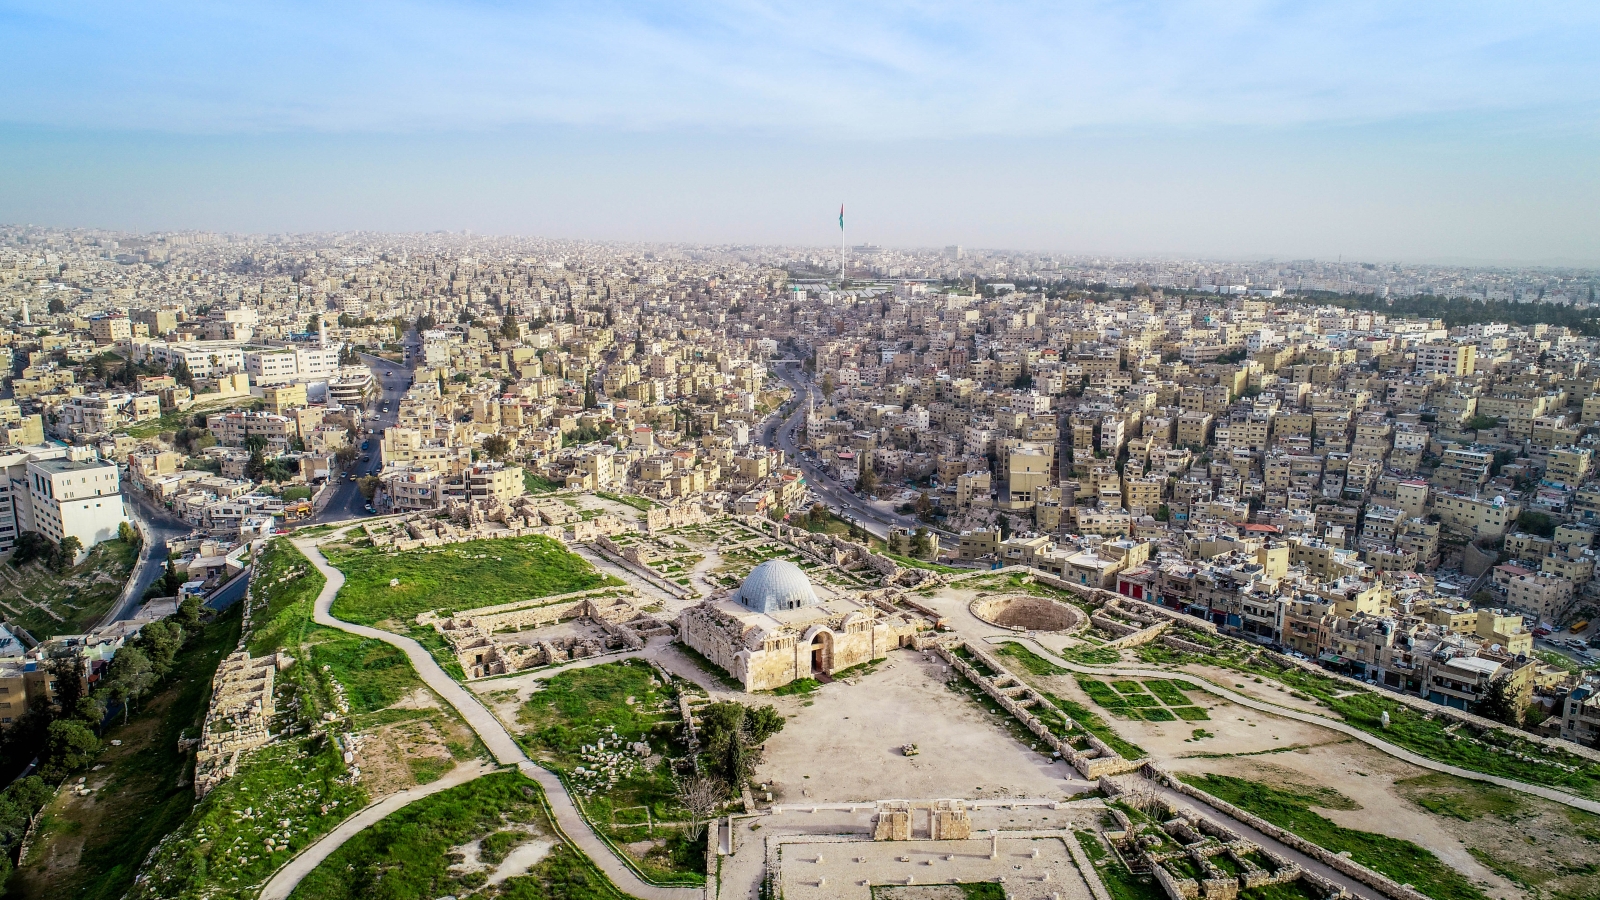 Aerial view over Amman, Jordan, including ancient ruins